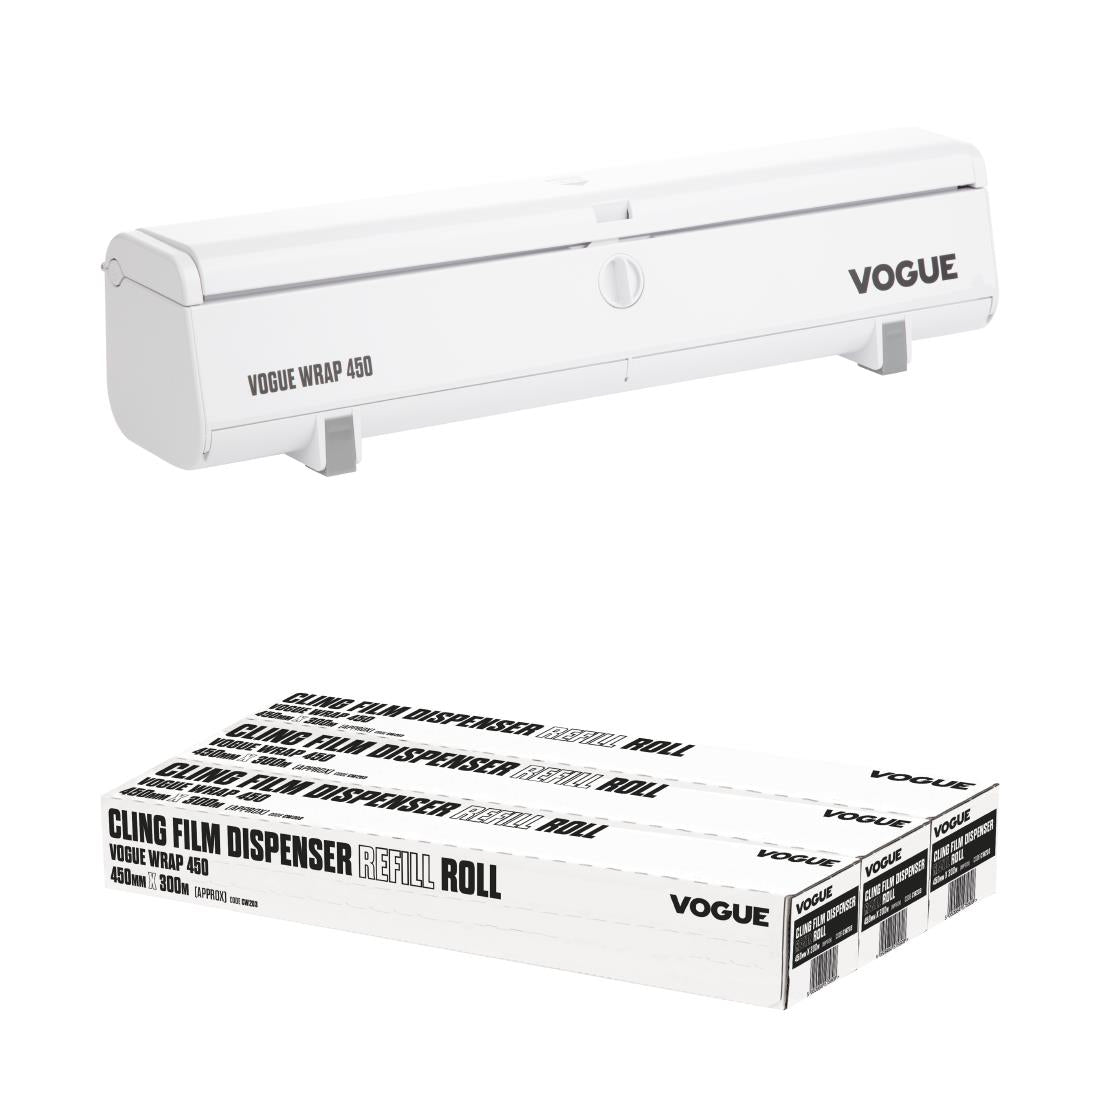 SA777 Vogue Wrap 450 Cling Film Dispenser Bundle